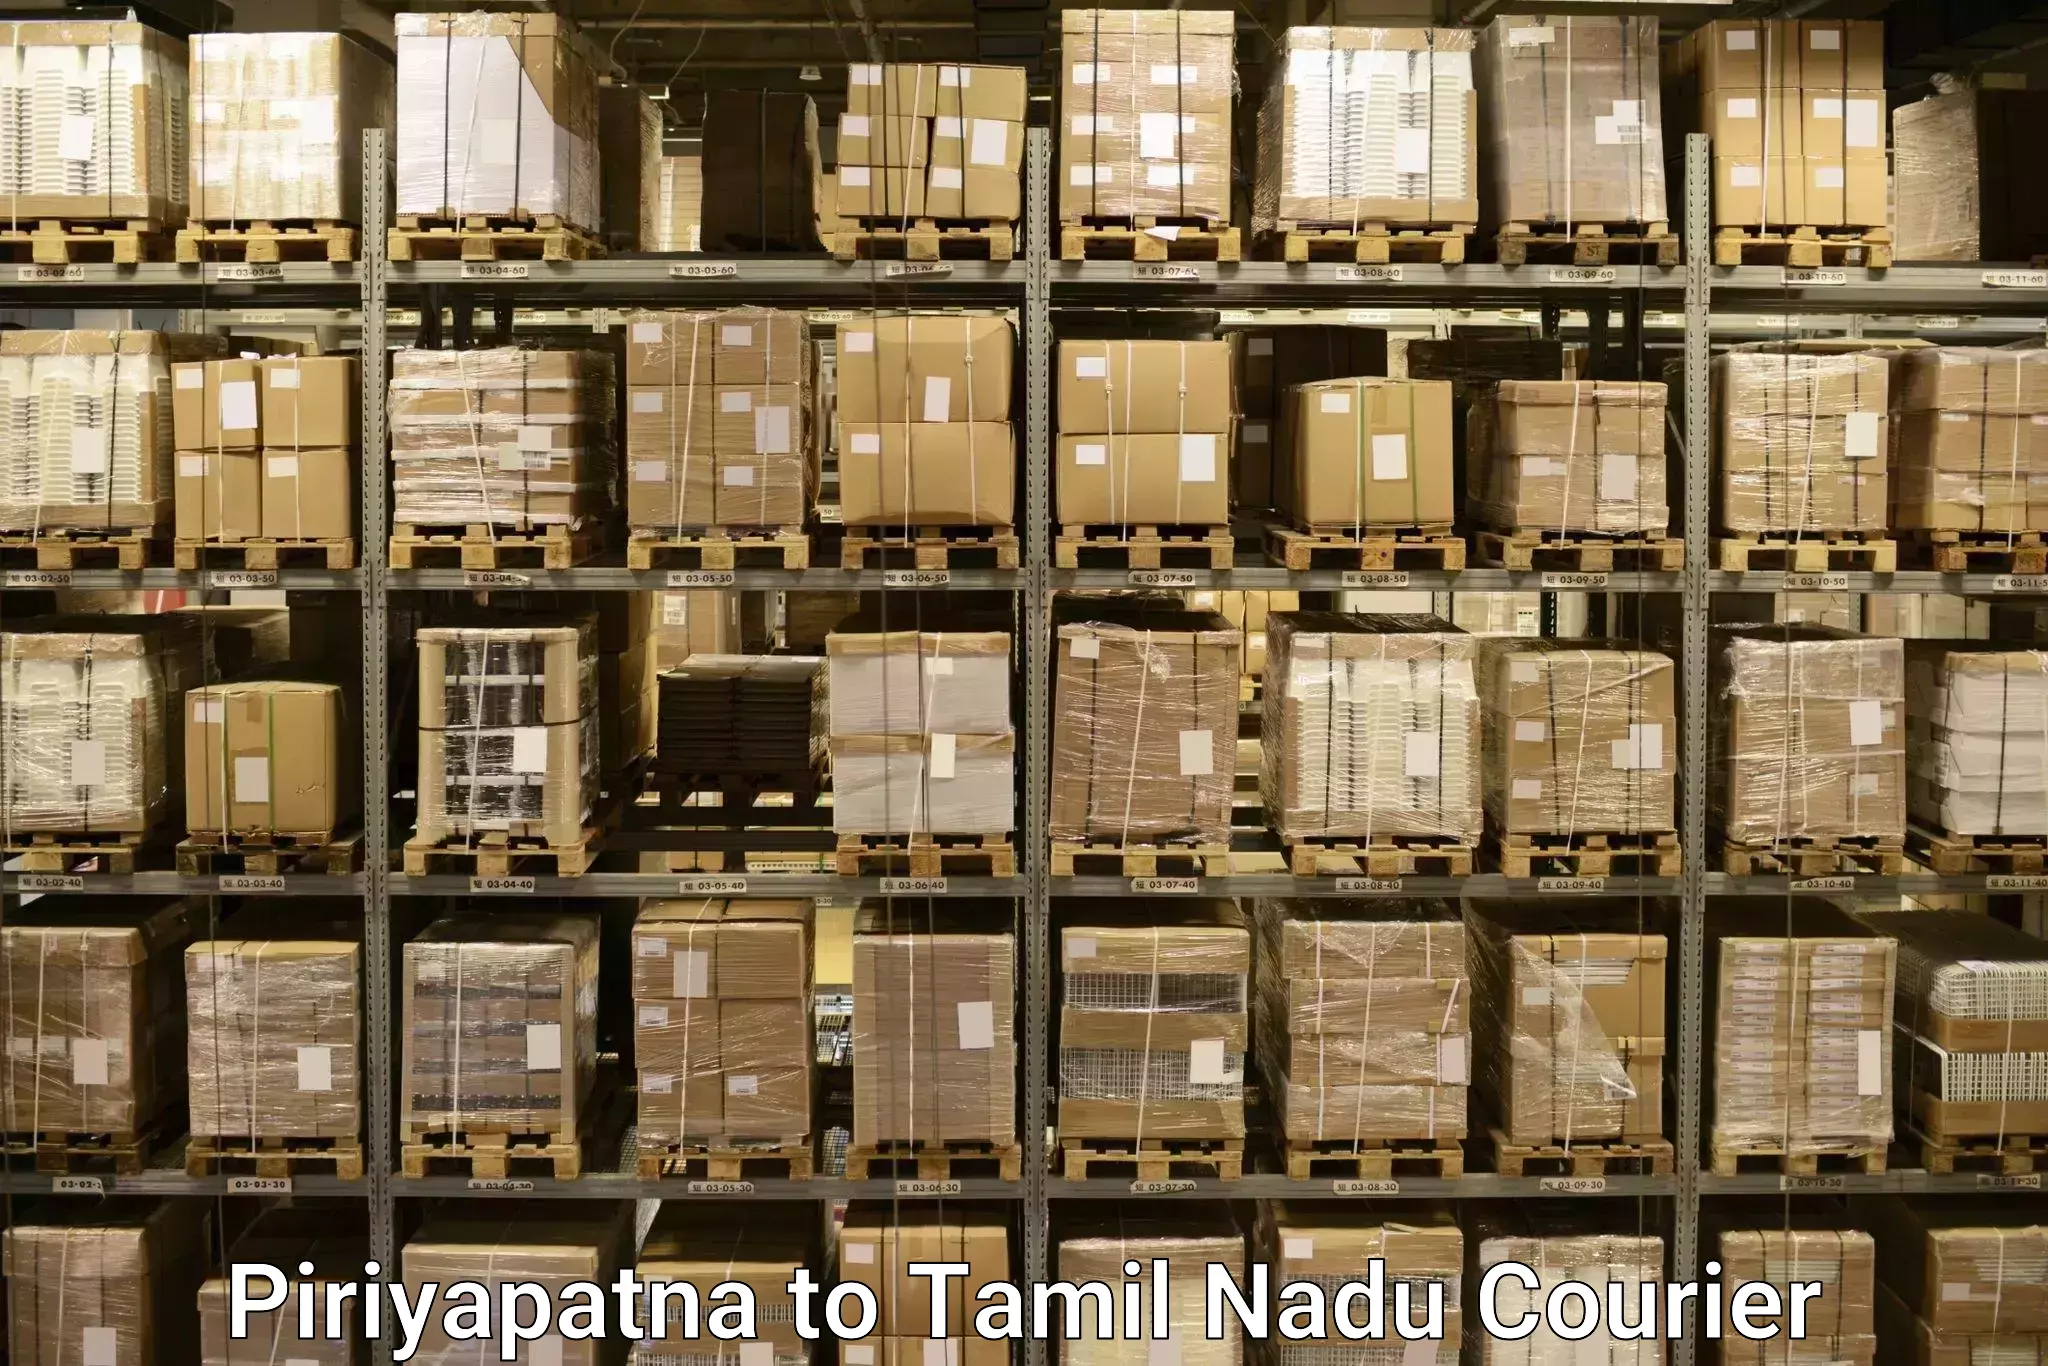 Luggage shipment specialists Piriyapatna to Thiruvadanai